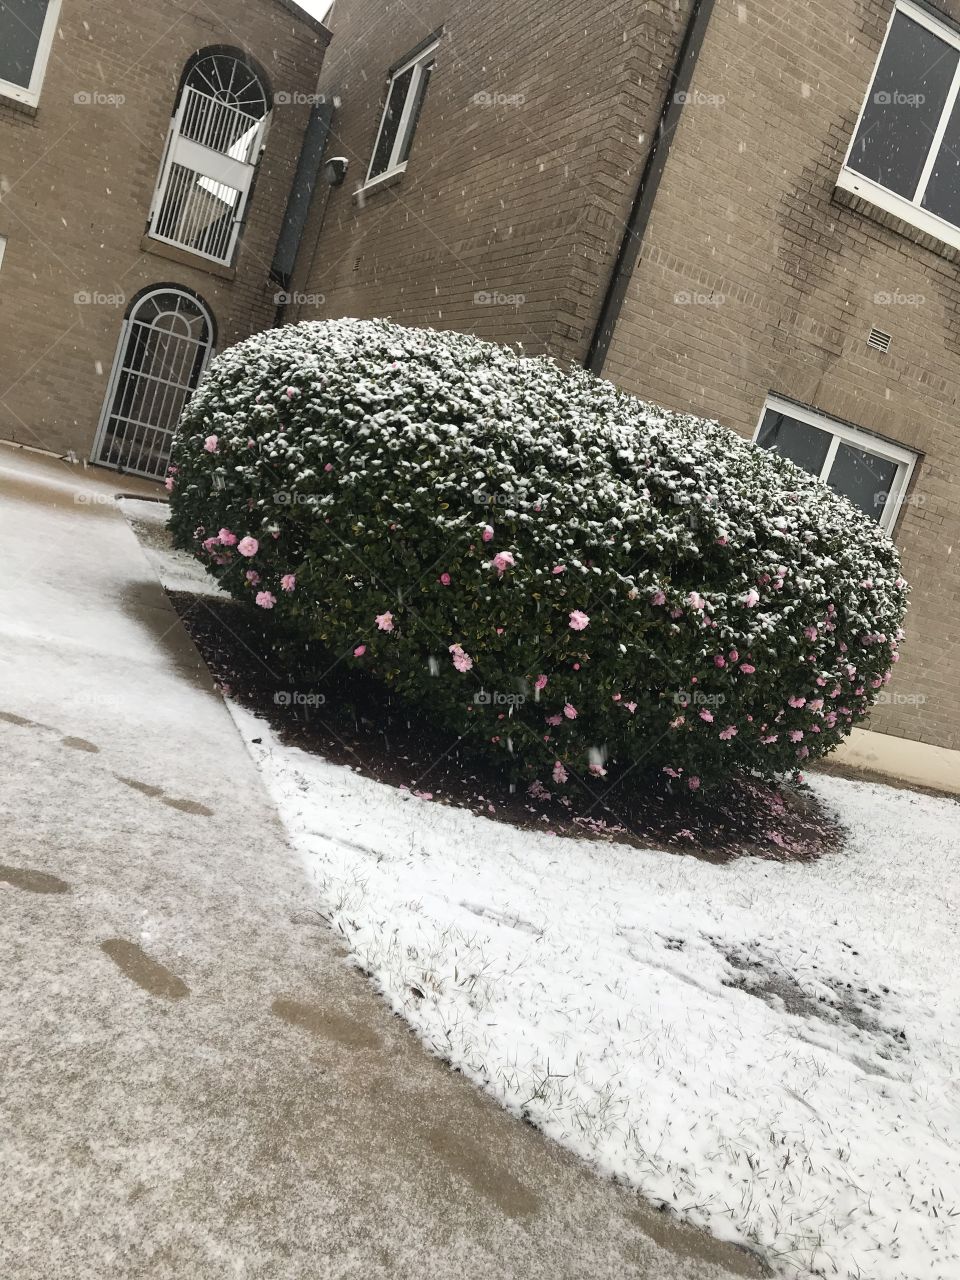 Snow on a flower bush!